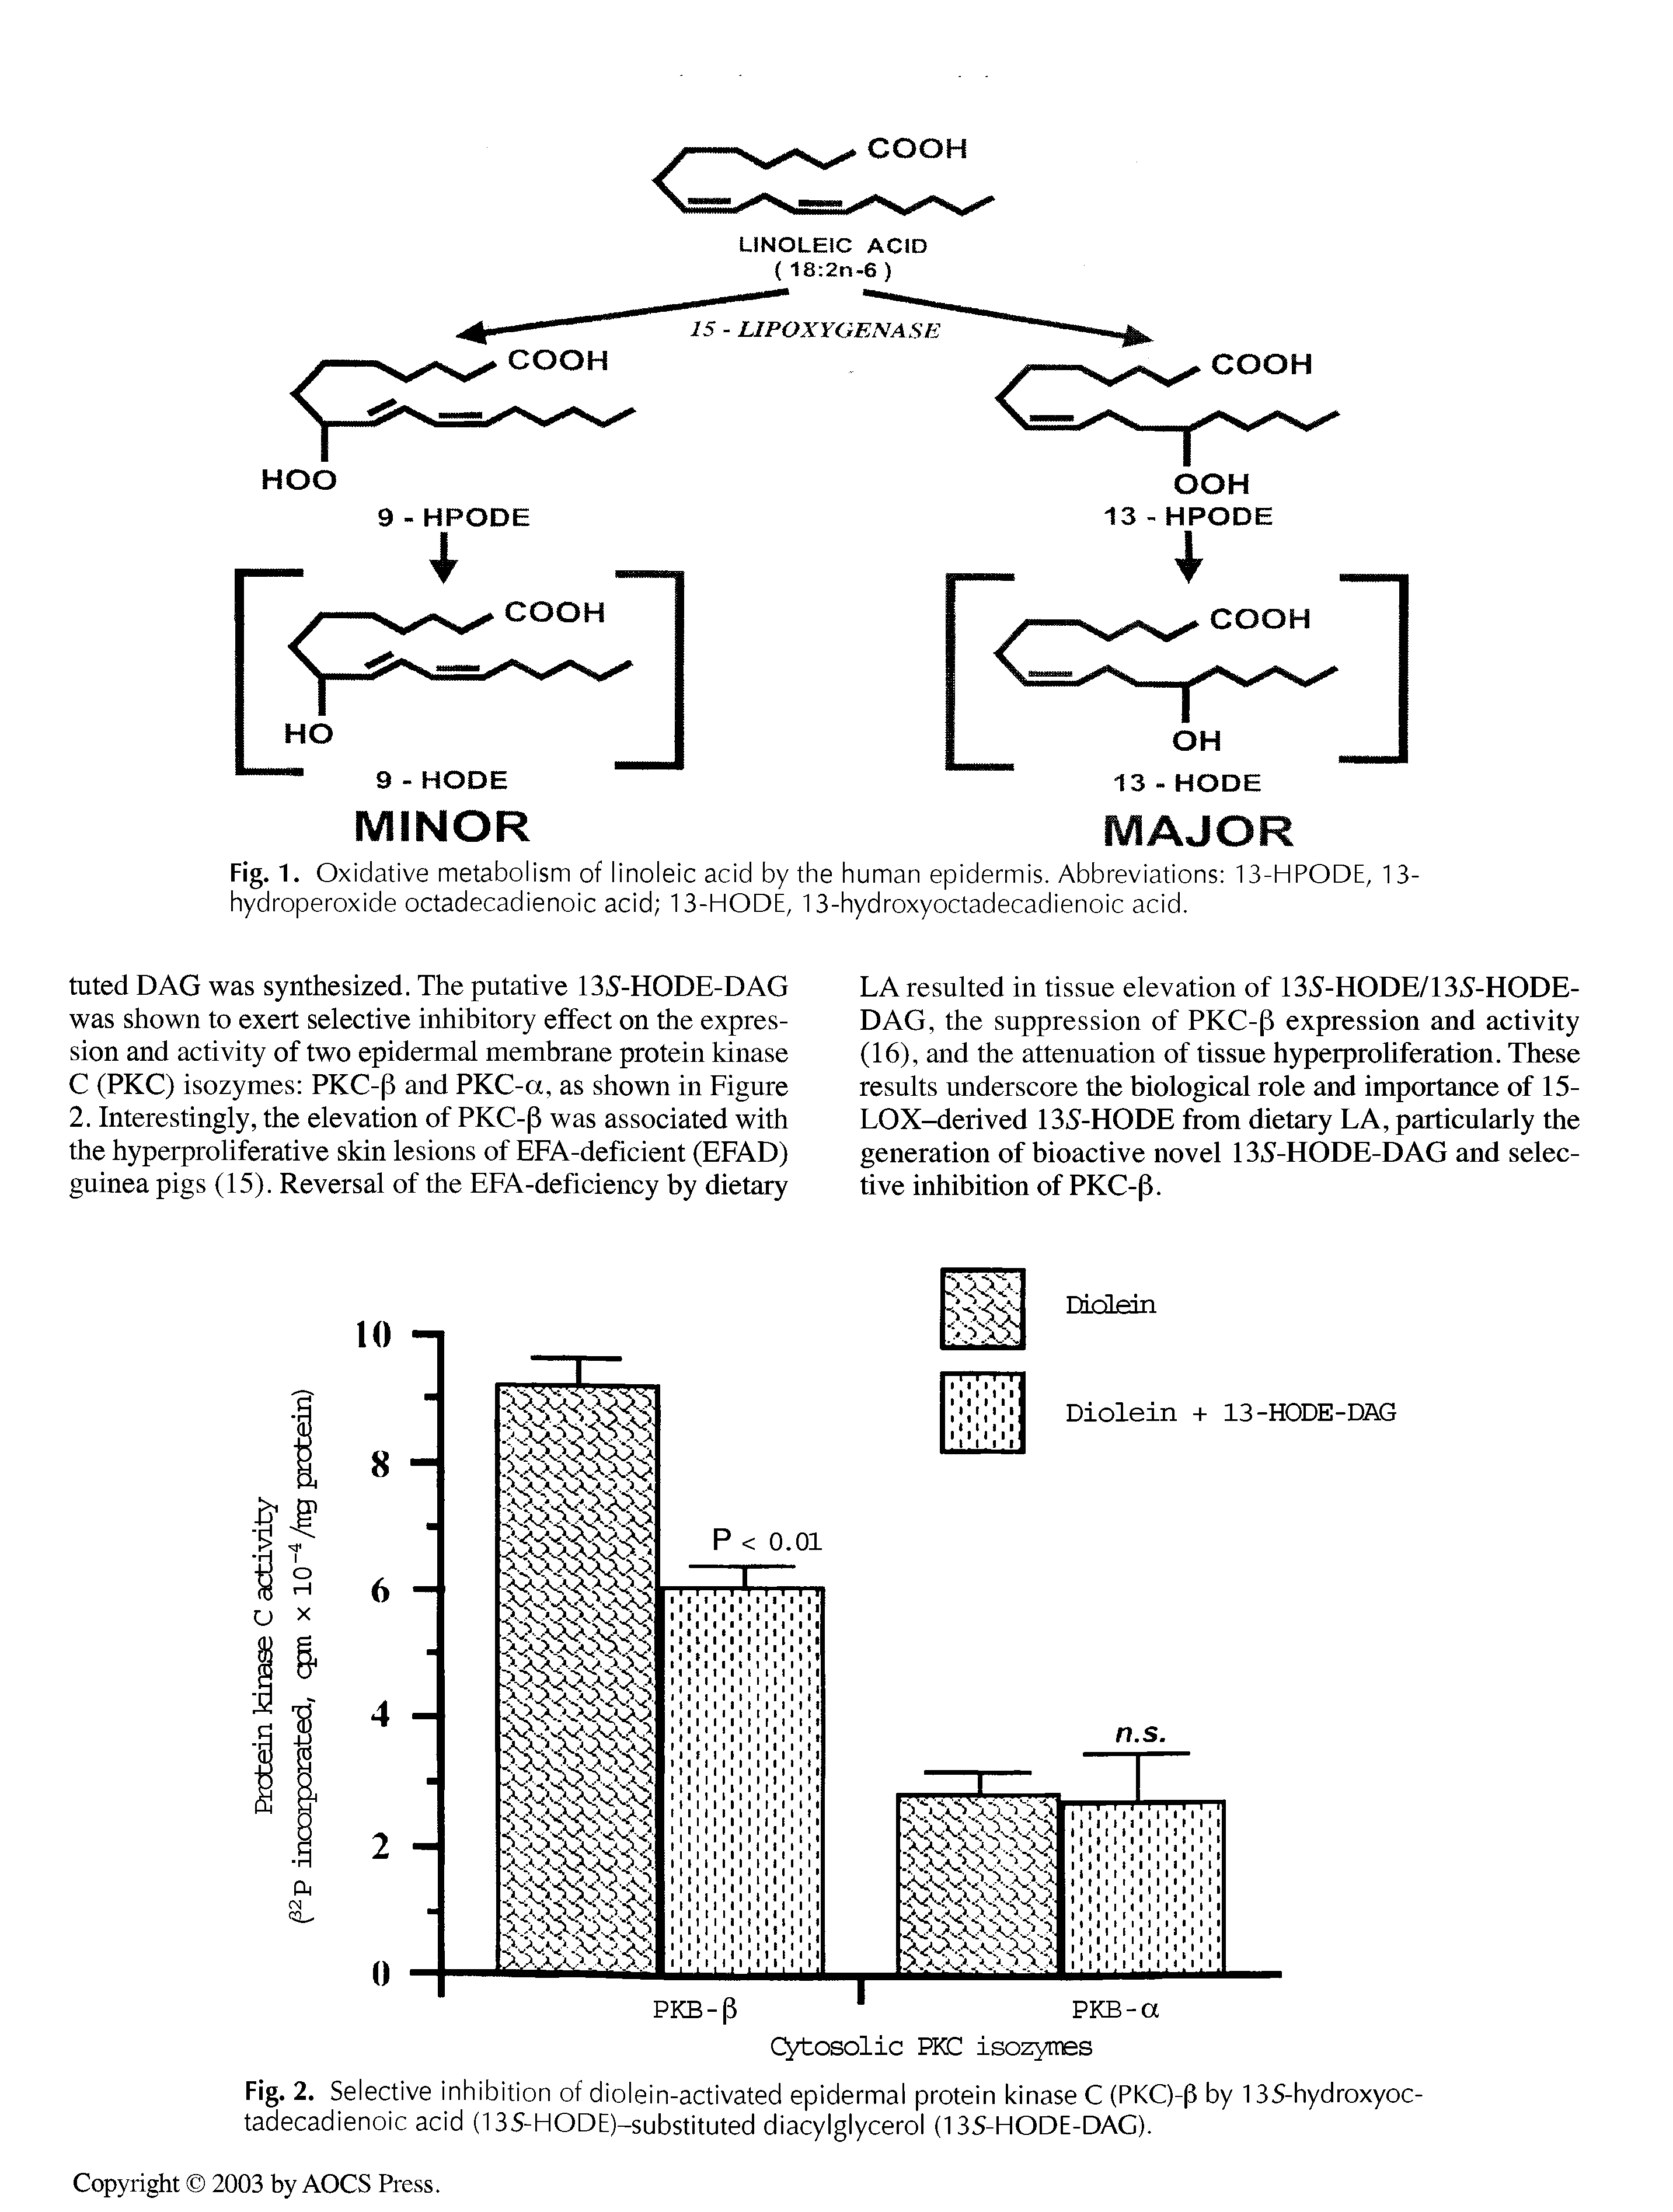 Fig. 1. Oxidative metabolism of linoleic acid by the human epidermis. Abbreviations 13-HPODE, 13-hydroperoxide octadecadienoic acid 13-HODE, 13-hydroxyoctadecadienoic acid.